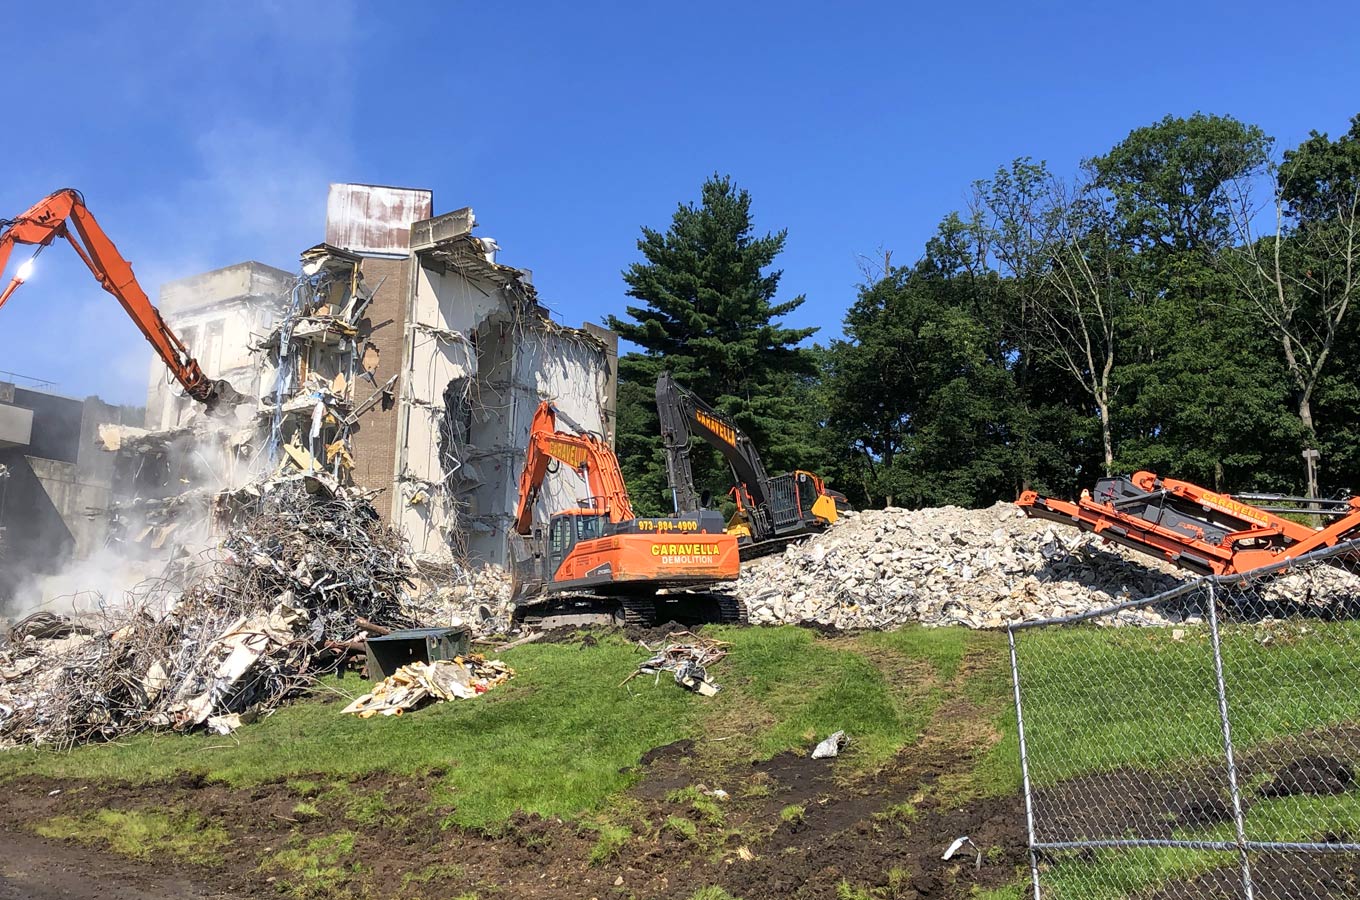 Demolition Services in Orange, NJ 07050 | Caravella Demolition